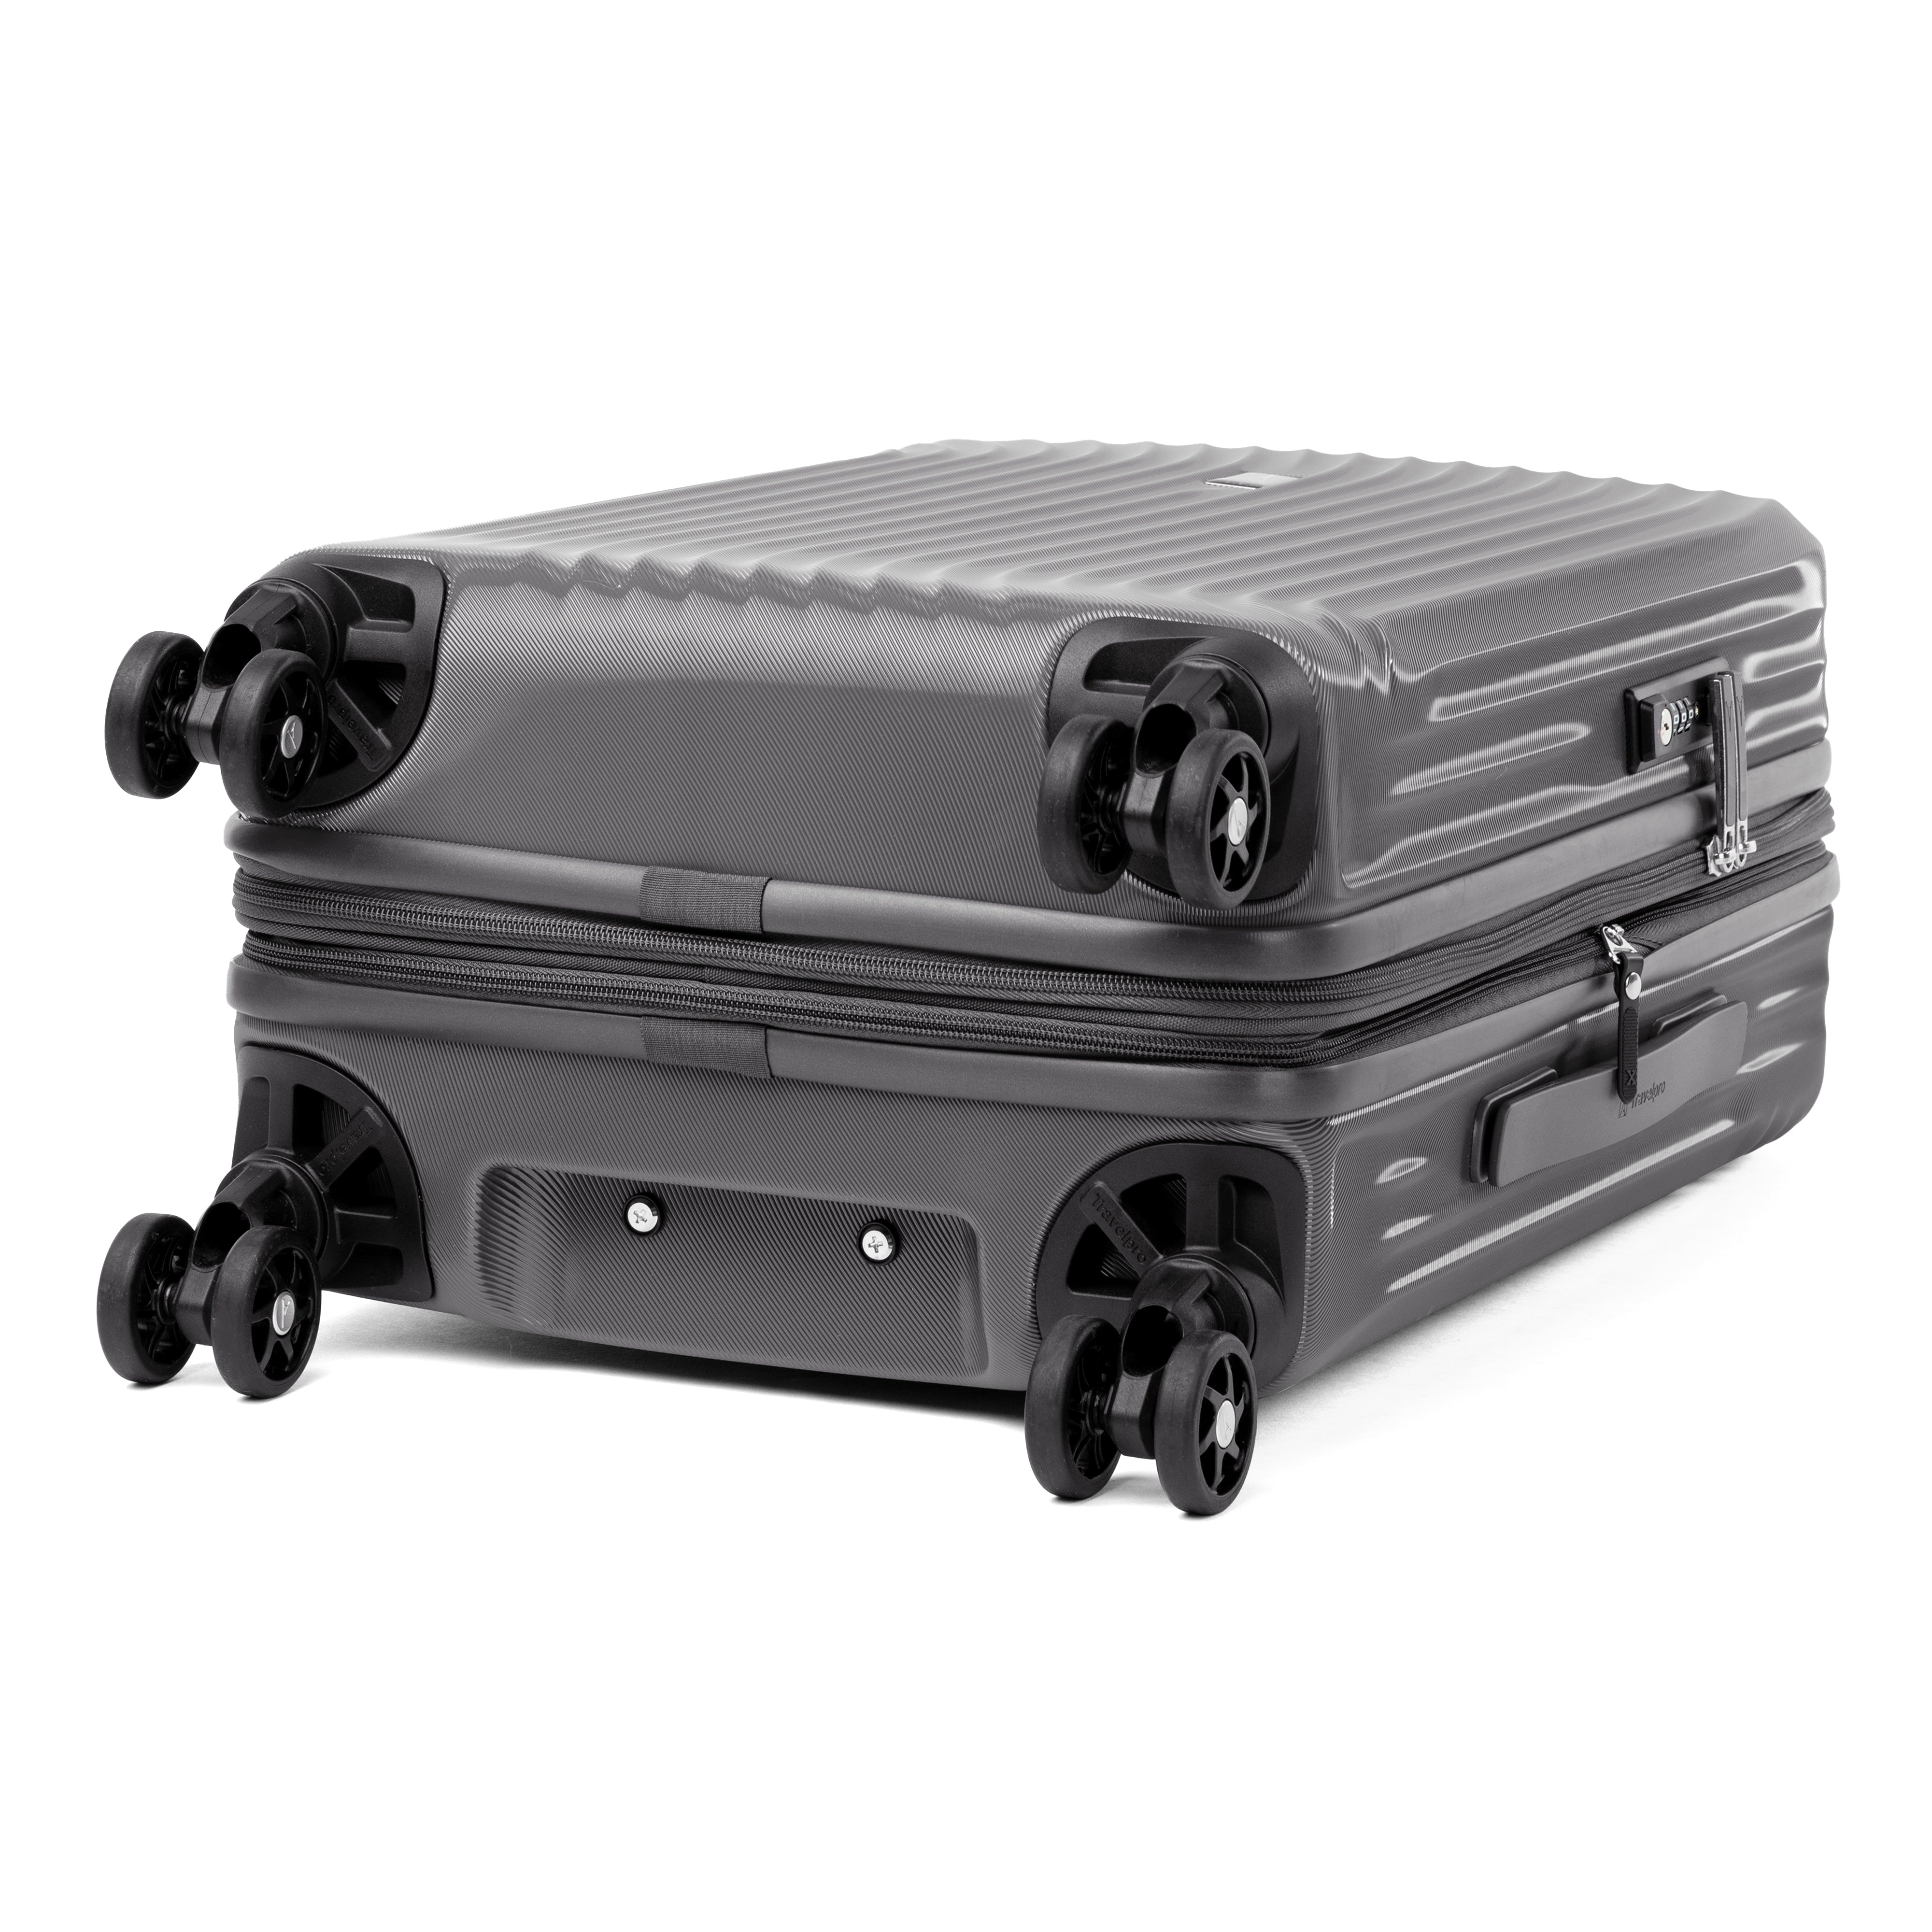 Travelpro Maxlite Air Hardside Expandable Luggage, 8 Spinner Wheels, Lightweight Hard Shell Polycarbonate U3